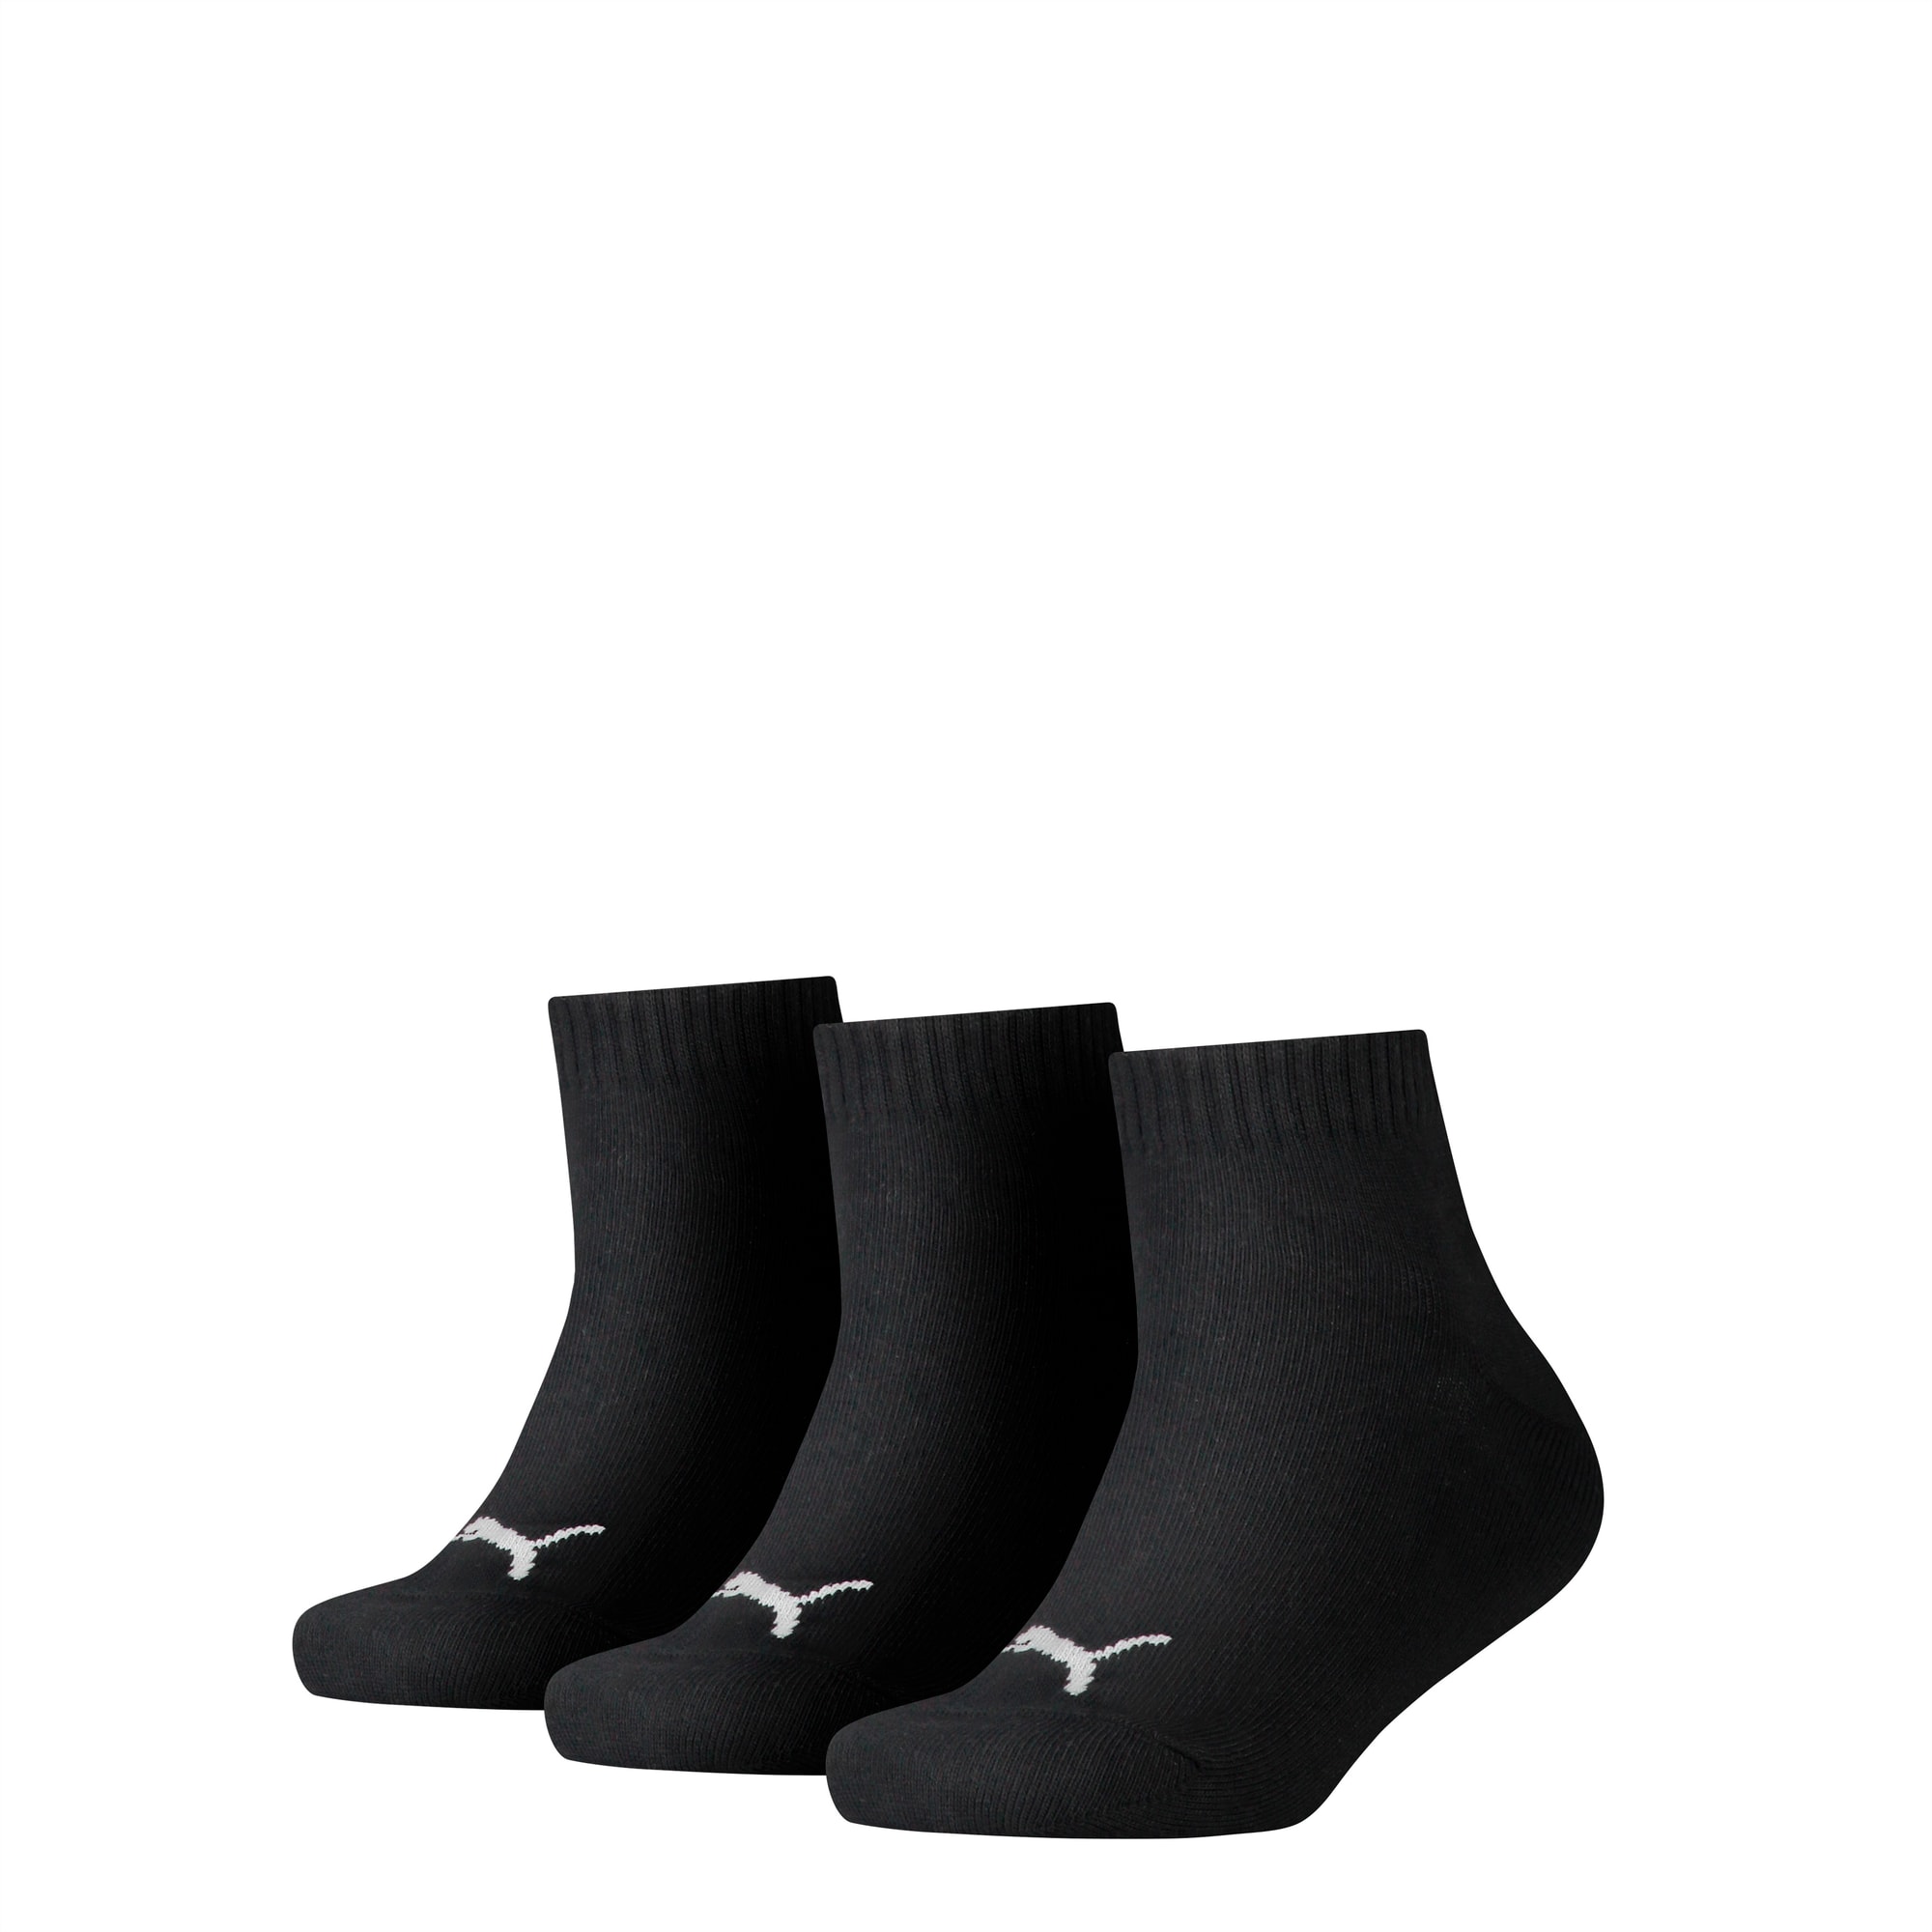 PUMA Kids' Quarter Socks 3 Pack, Black, Size 23-26, Clothing